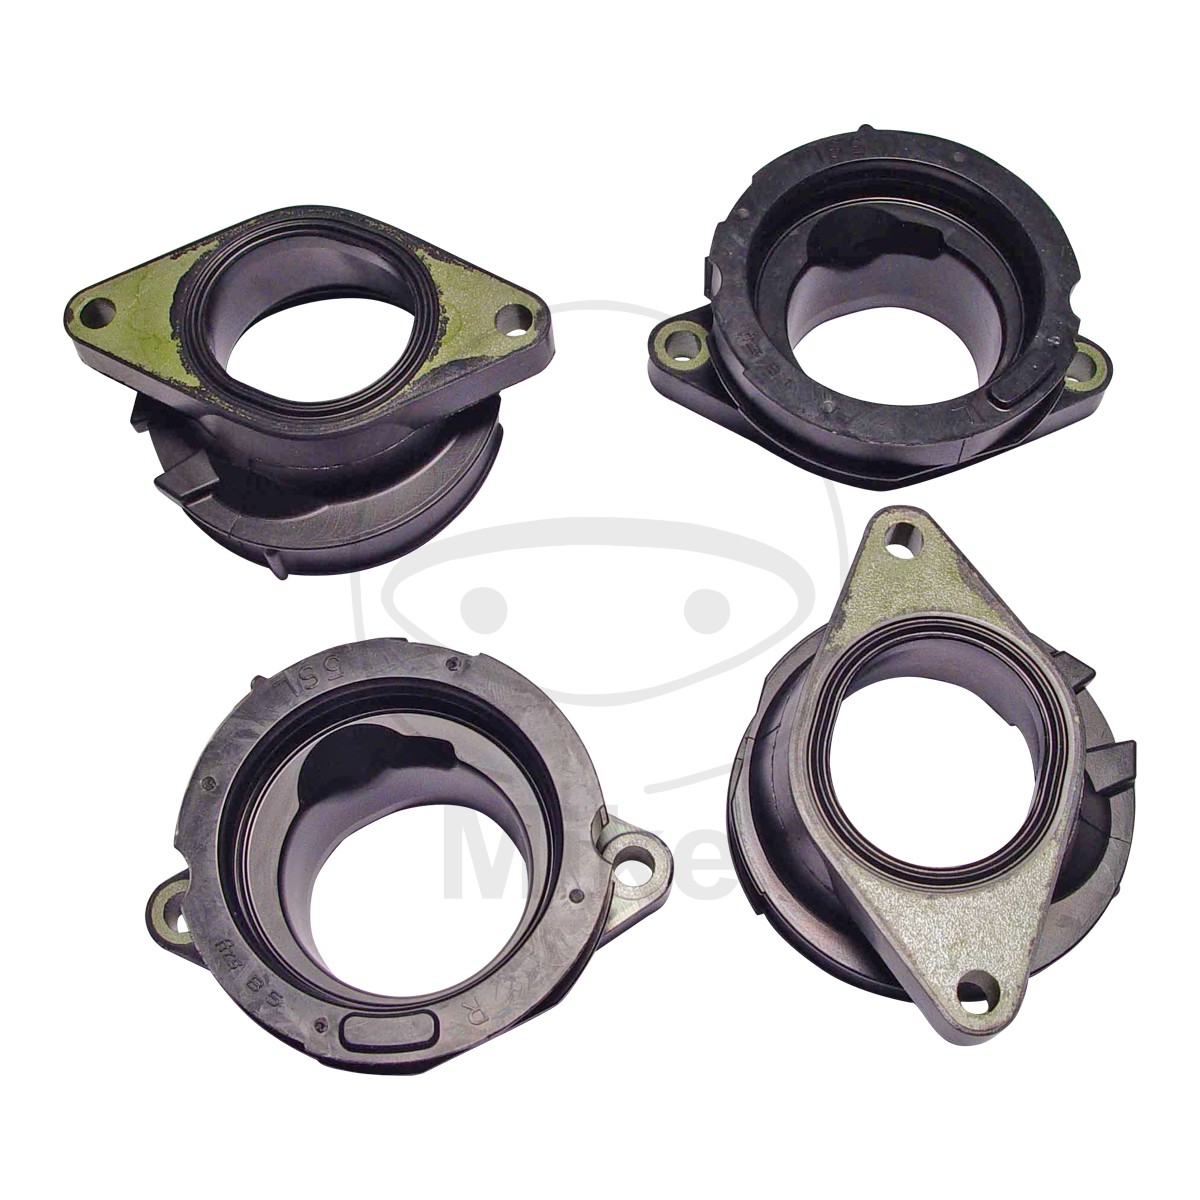 Obrázek produktu Front brake reservoir kit TOURMAX Lid, seal & screws